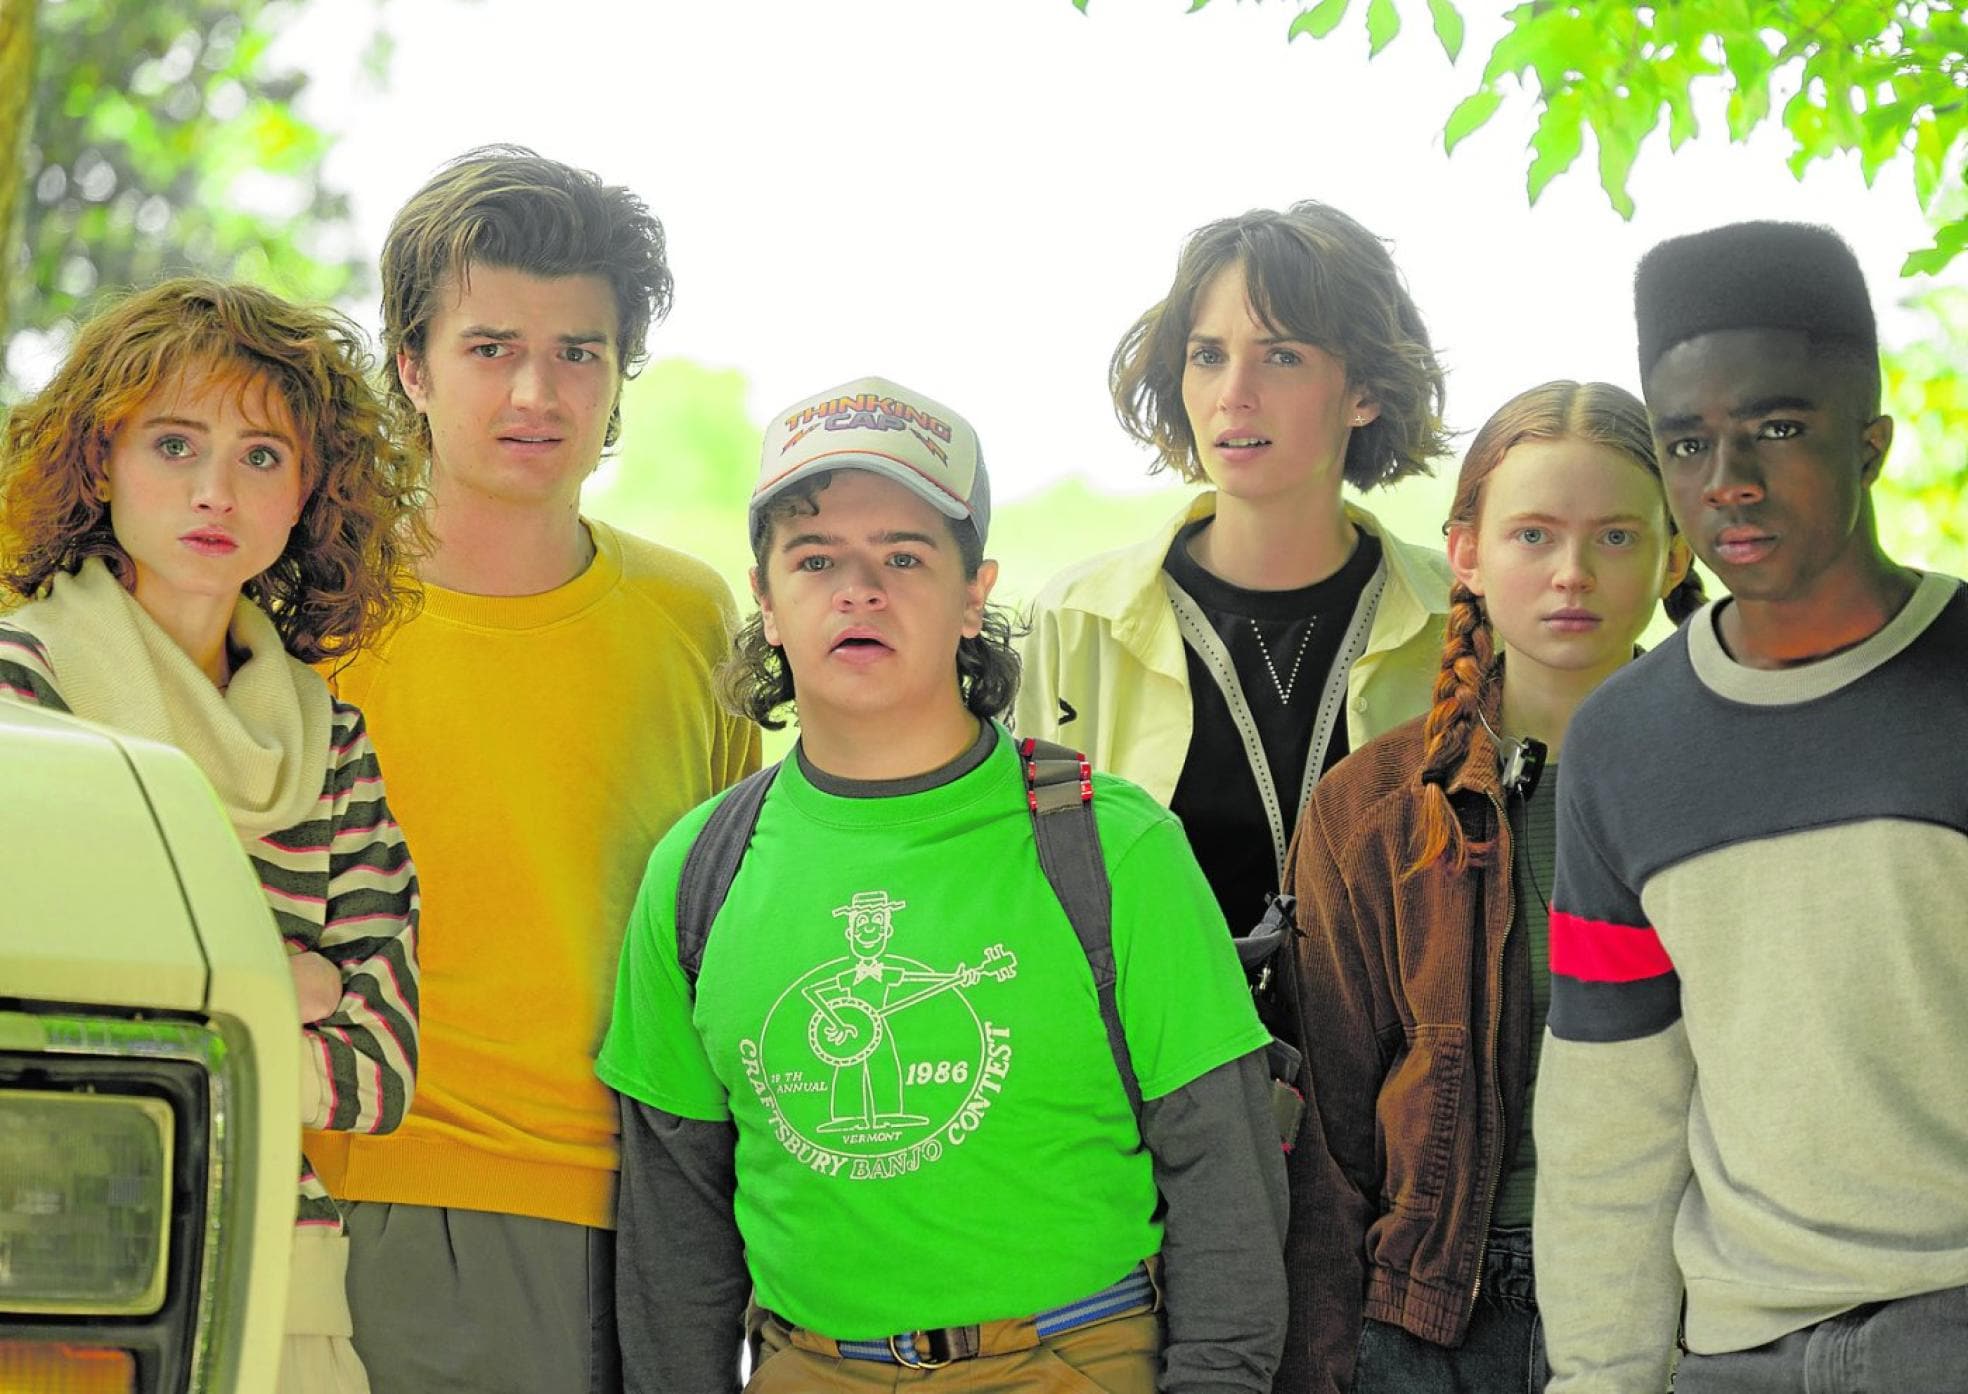 Nancy, Steve, Dustin, Robin, Max y Lucas, seis de los chavales que forman la pandilla de 'Stranger Things' en Netflix. r. c.